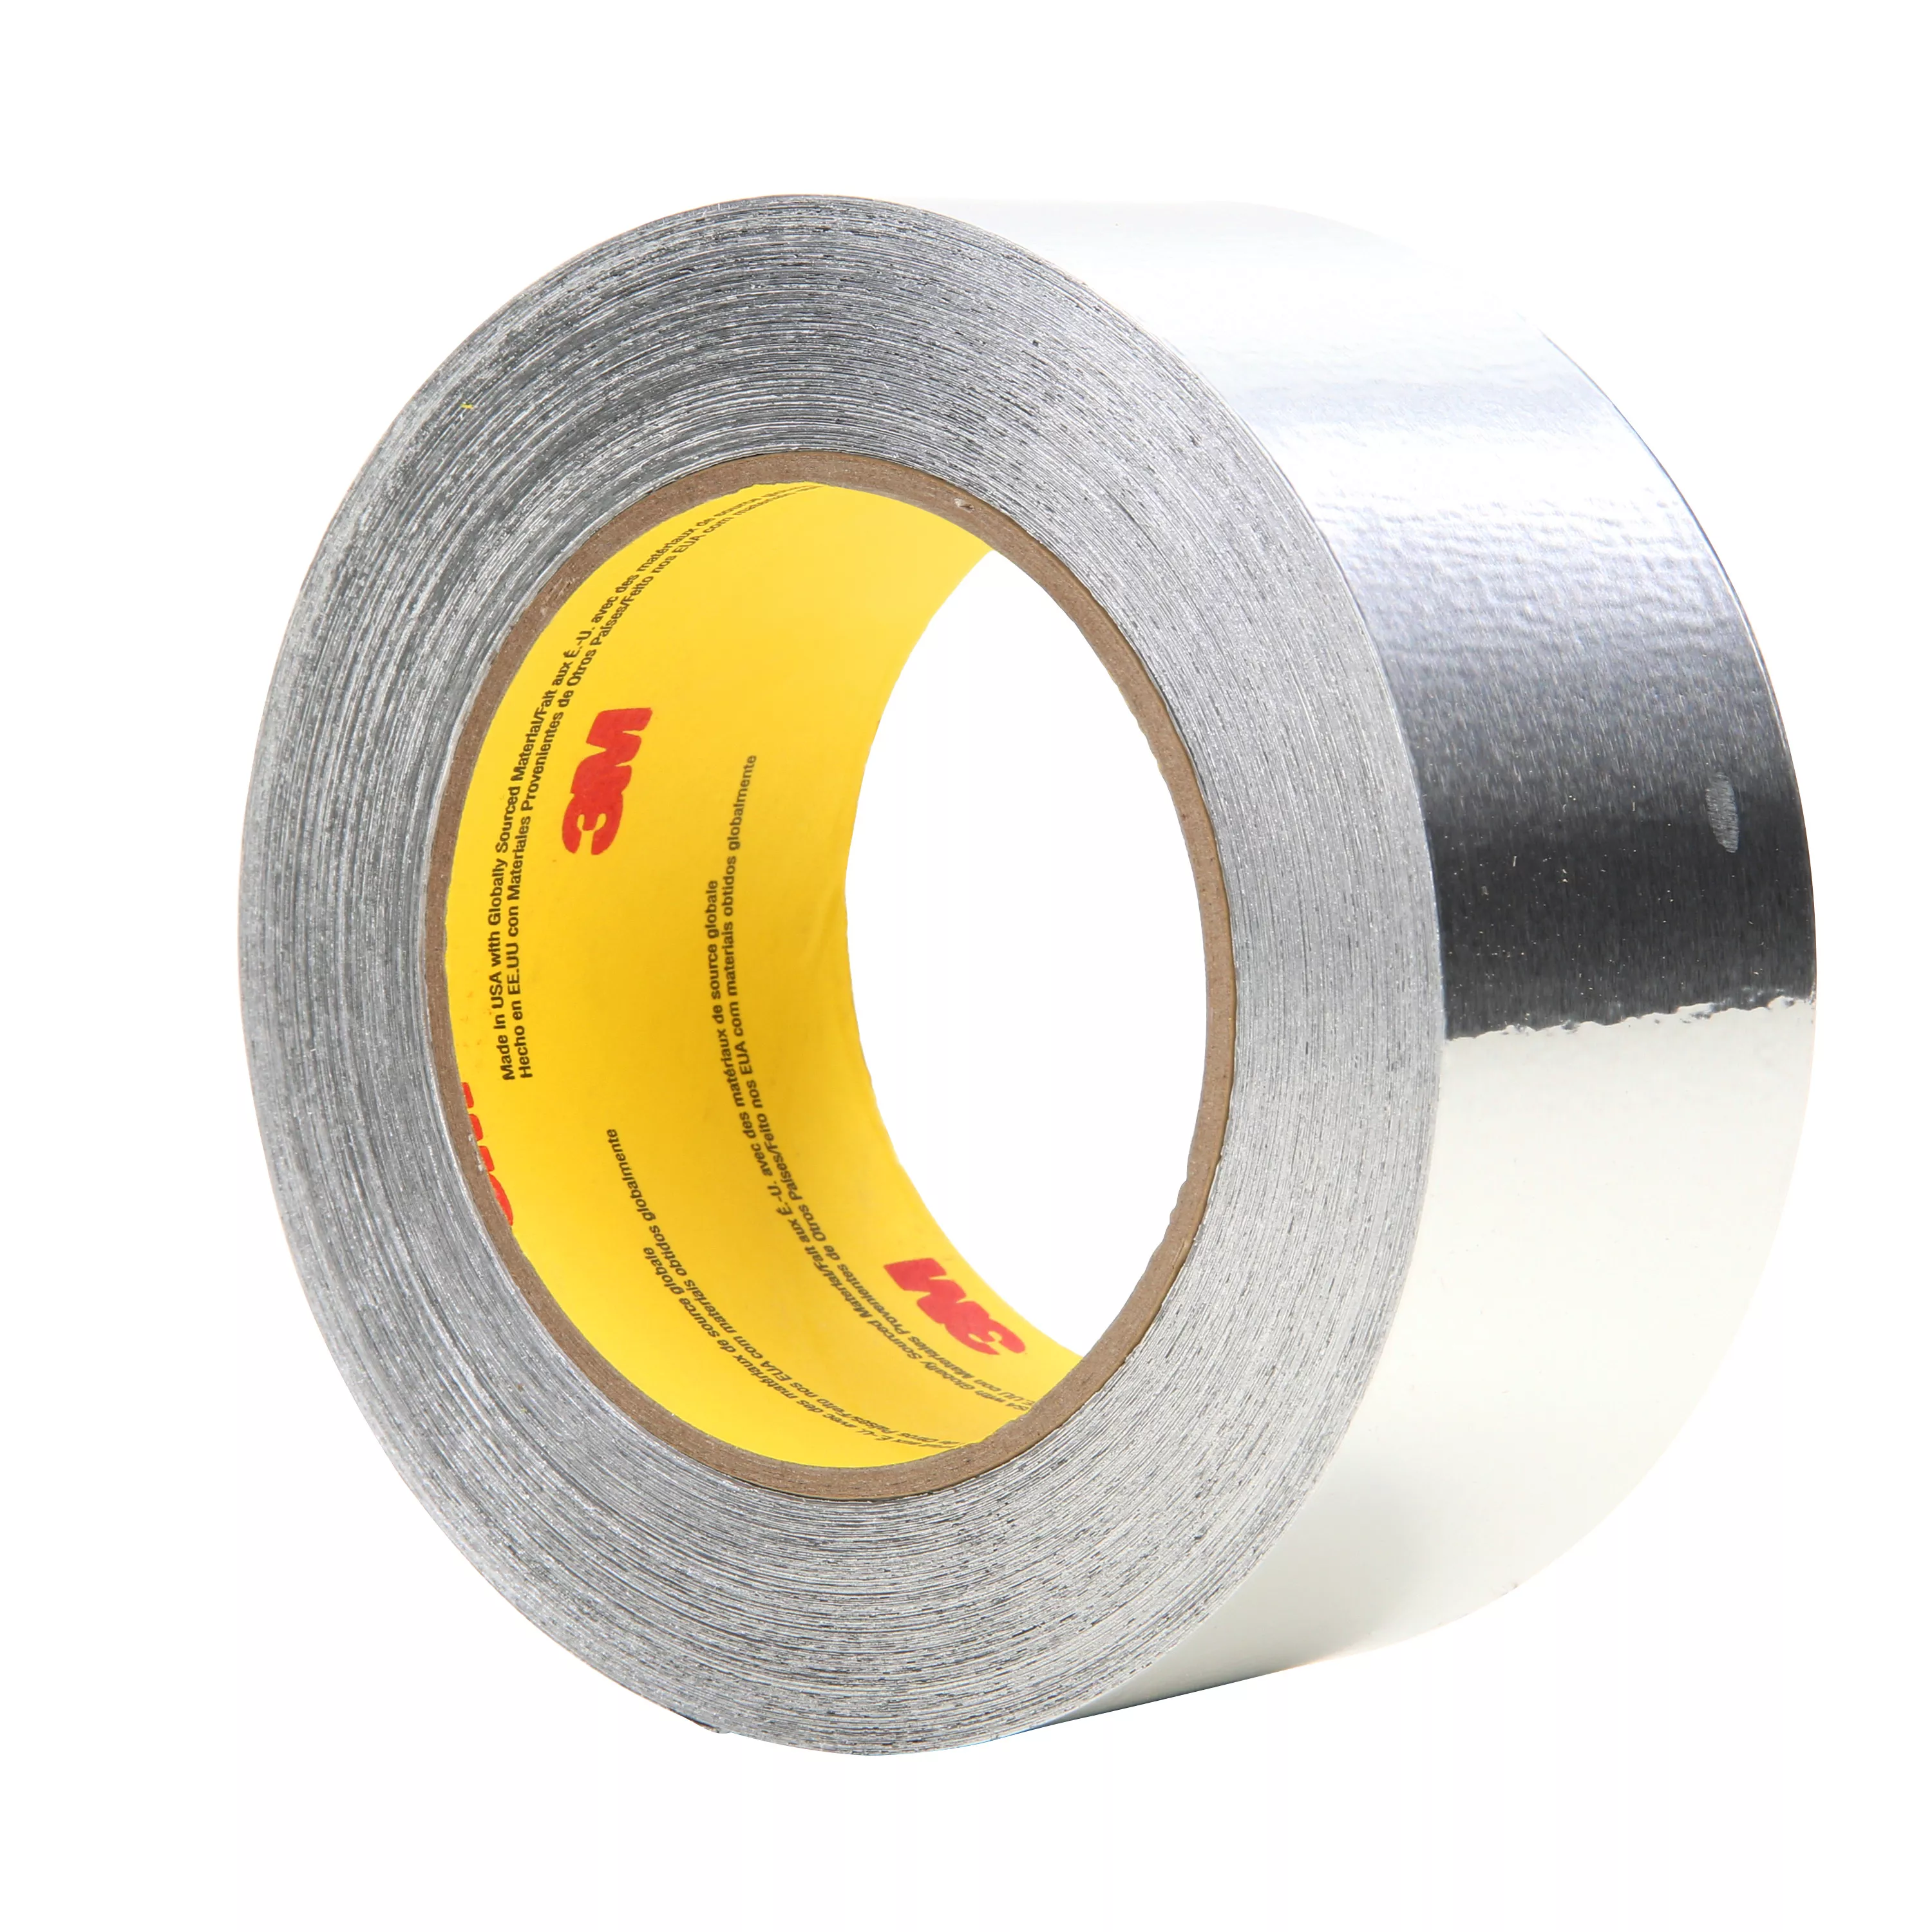 Product Number 425 | 3M™ Aluminum Foil Tape 425